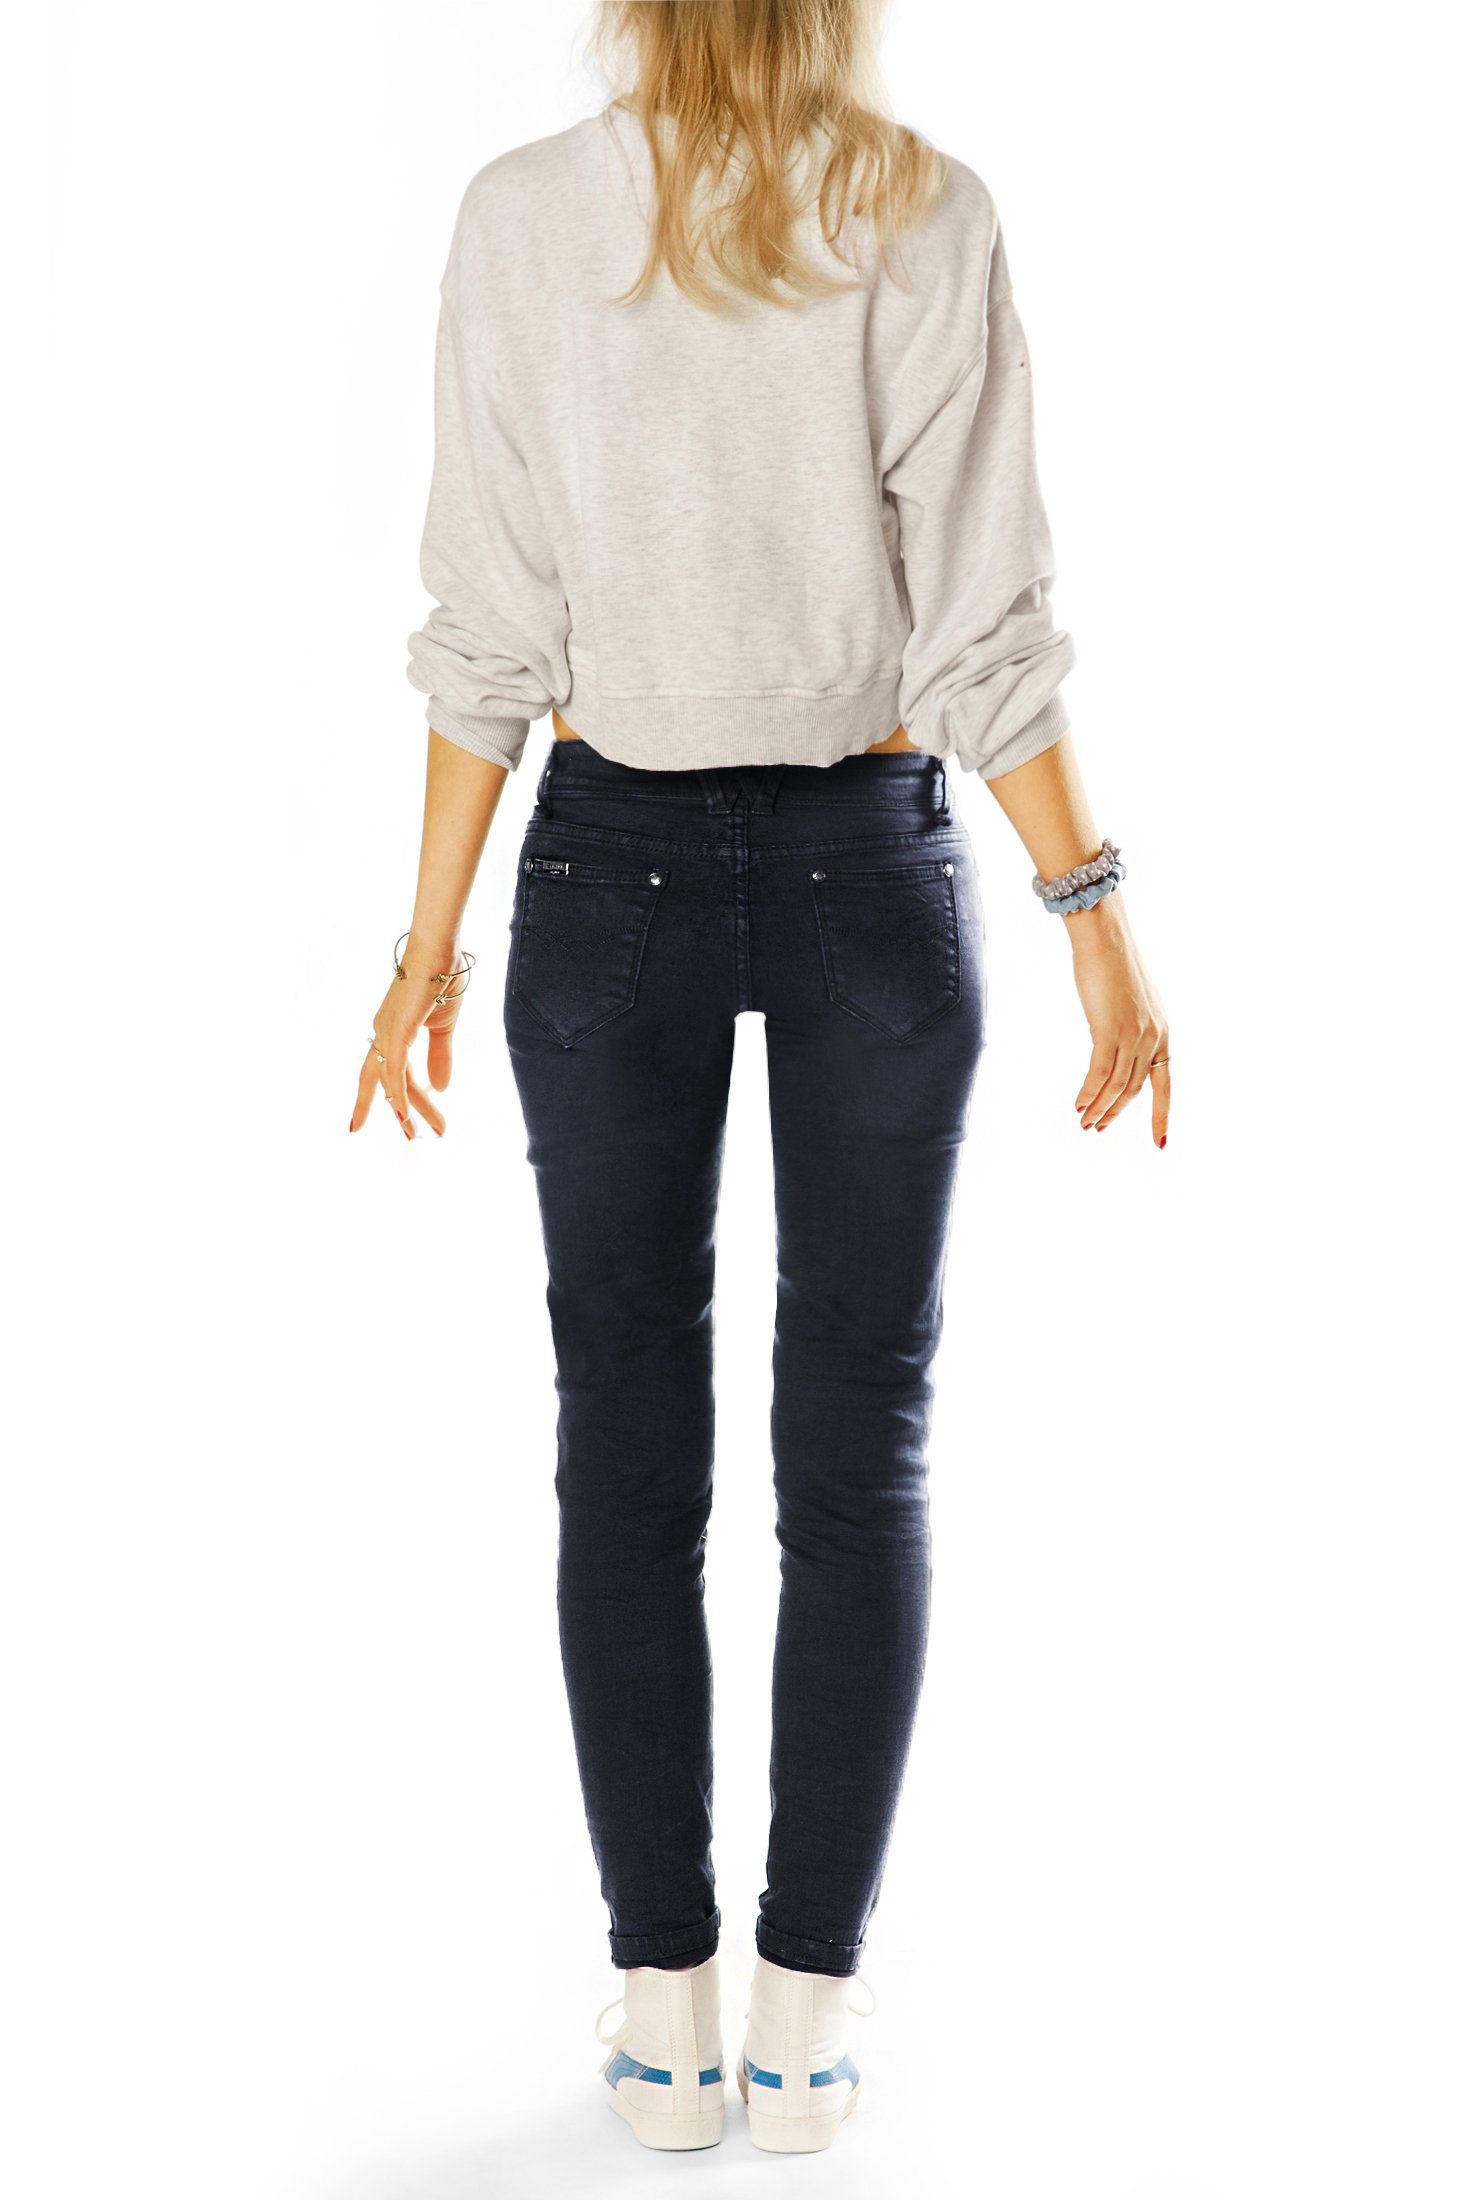 be styled Low-rise-Jeans Röhrenjeans Hose j18L-1 Damen hüftige Stretch-Anteil, Skinny Low Rise Hüftjeans mit - - 5-Pocket-Style